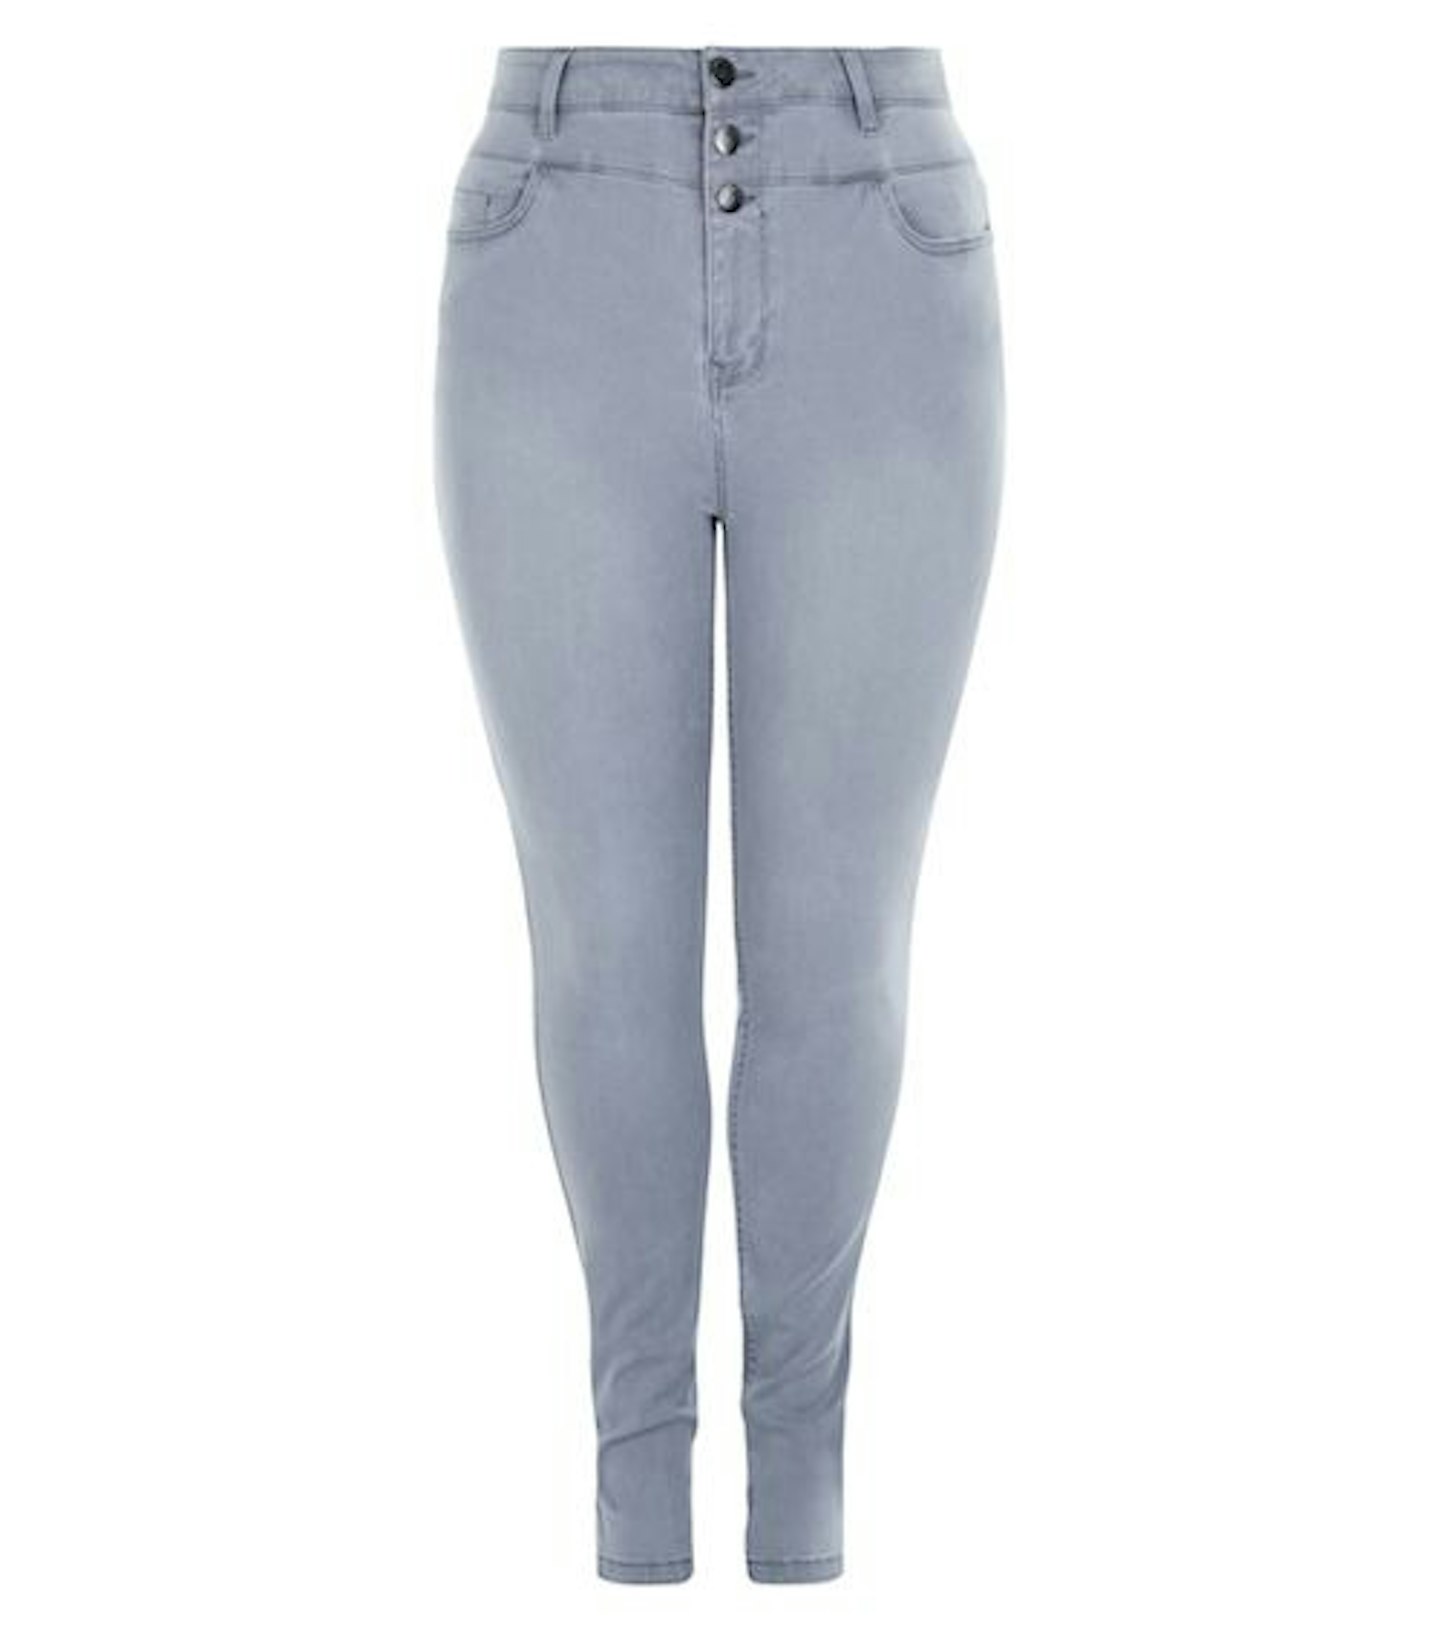 Grey jeans 24.99